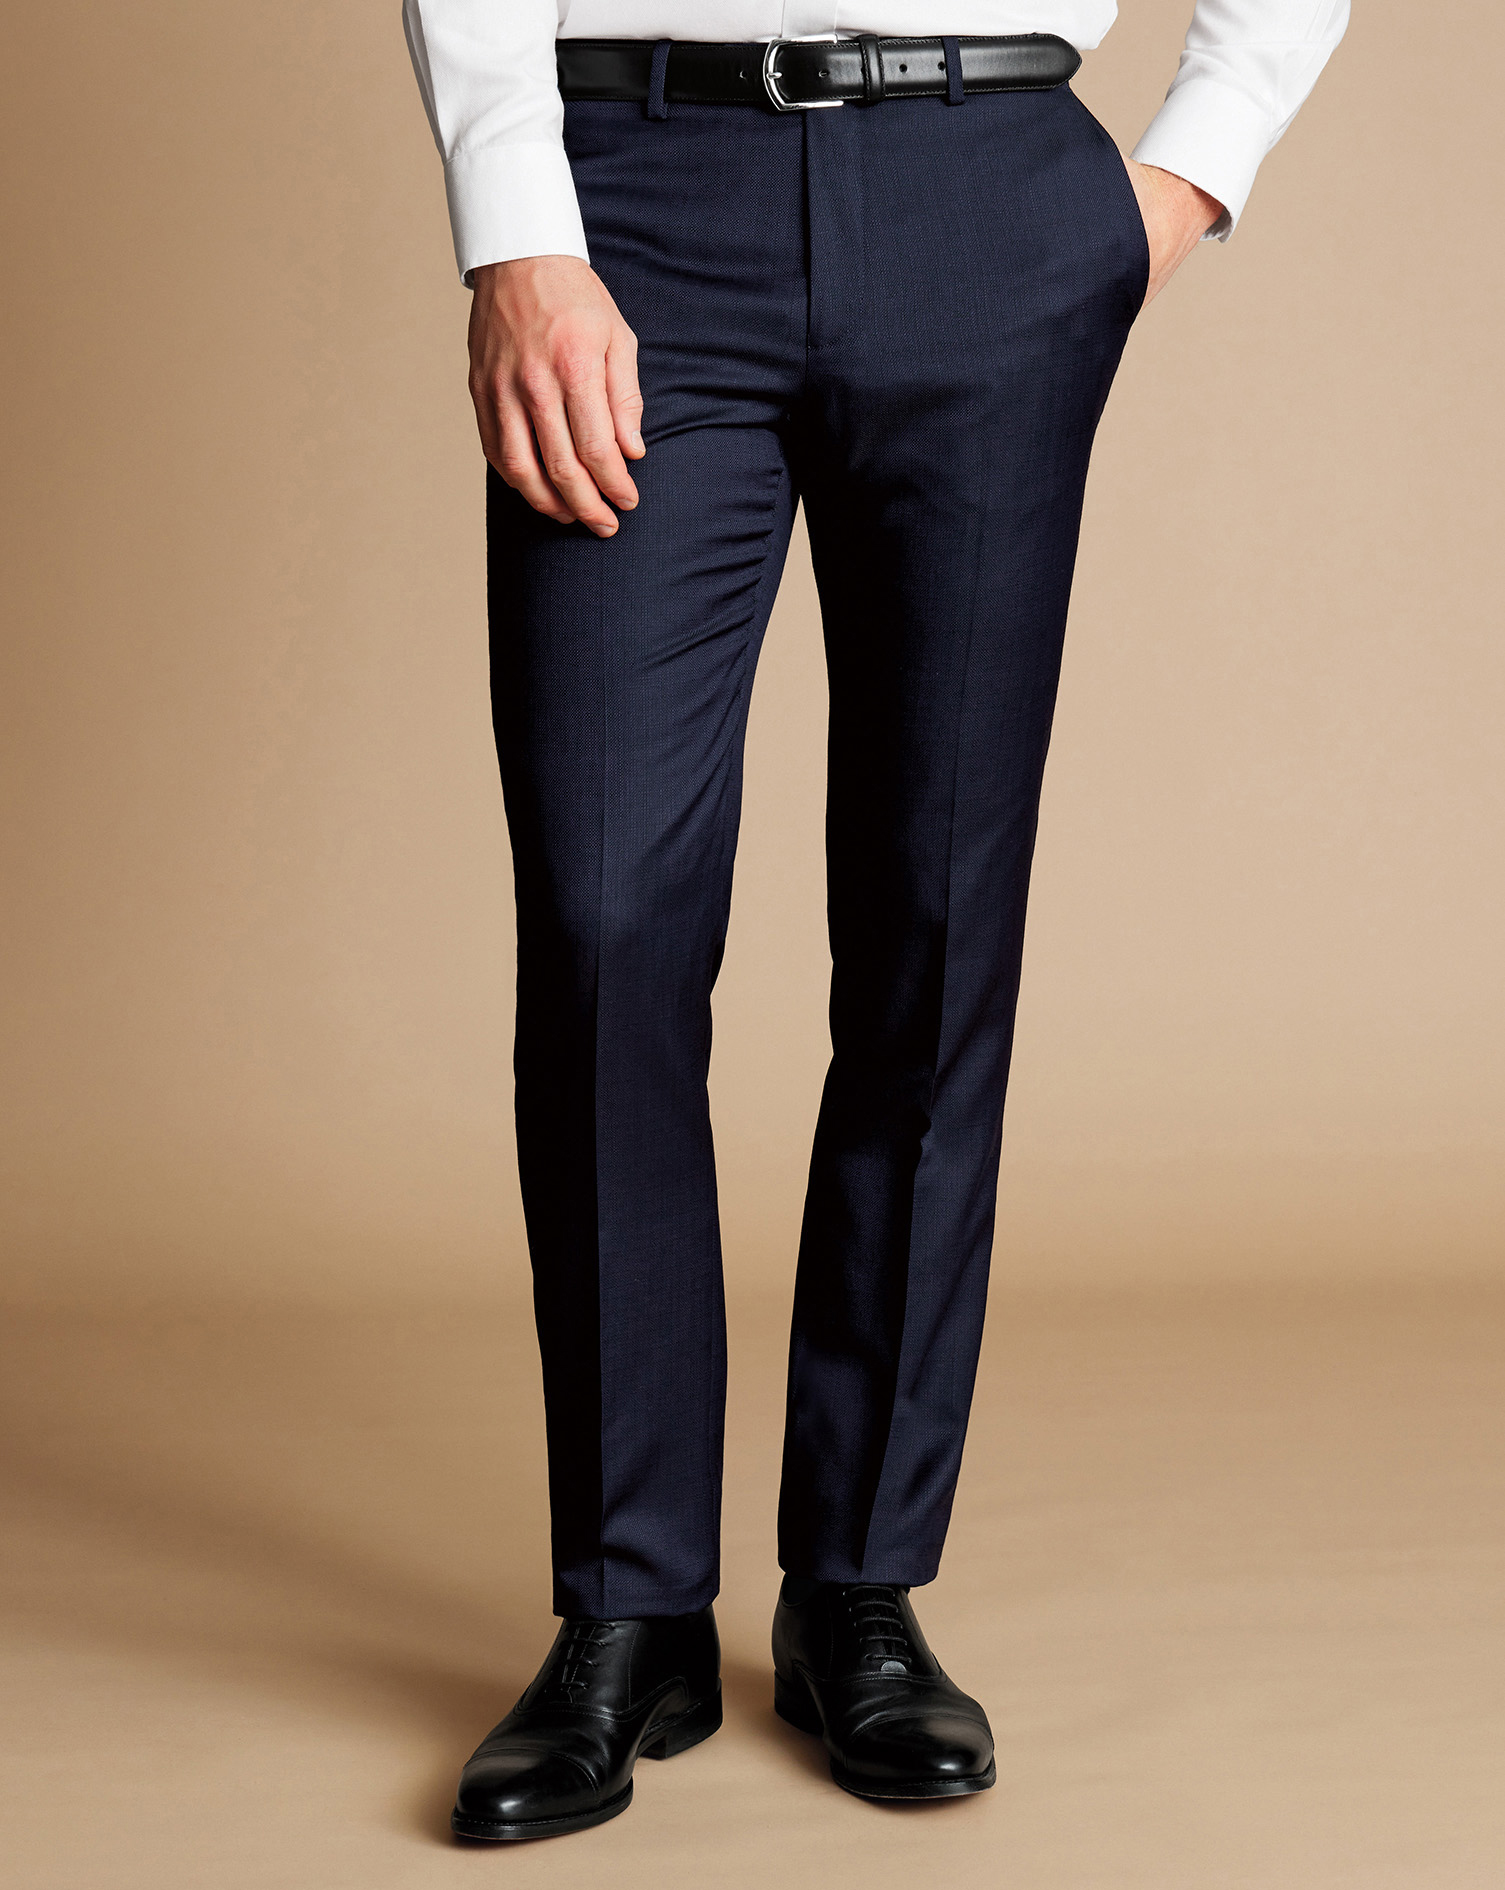 Men's Charles Tyrwhitt Italian Luxury Suit Trousers - Dark Navy Blue Size 34/38 Wool
